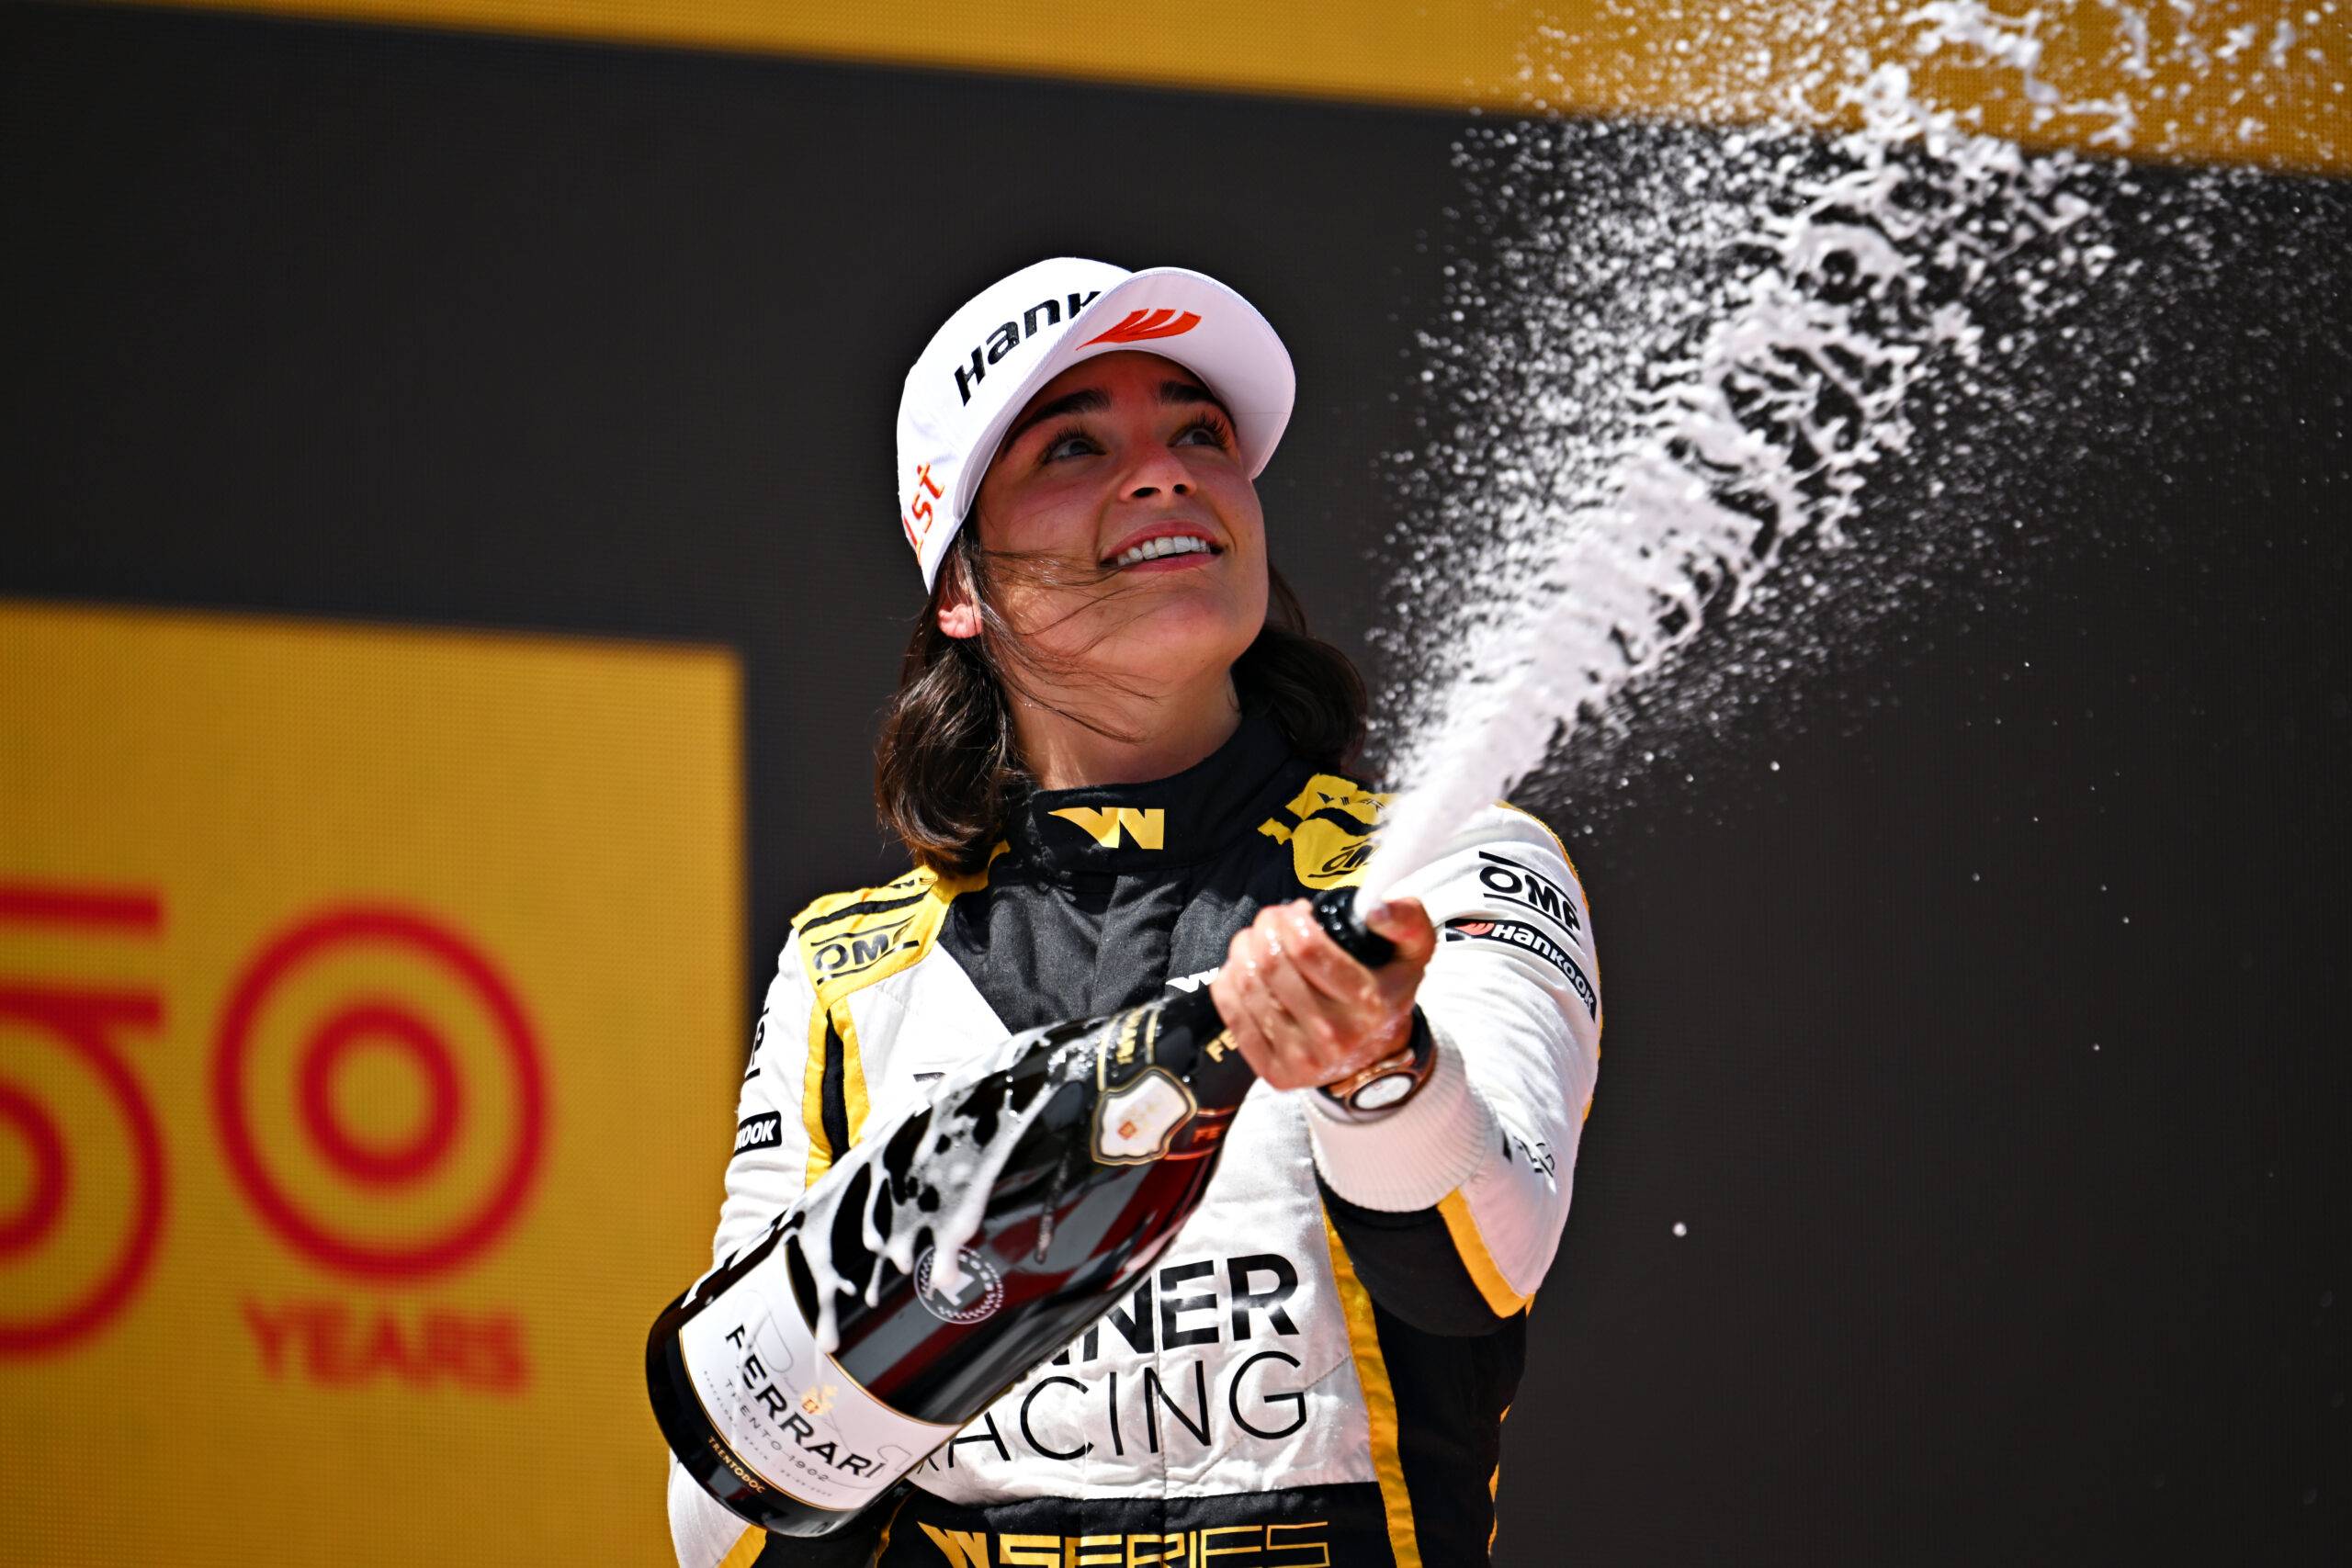 Jamie Chadwick celebrates winning Spanish GP